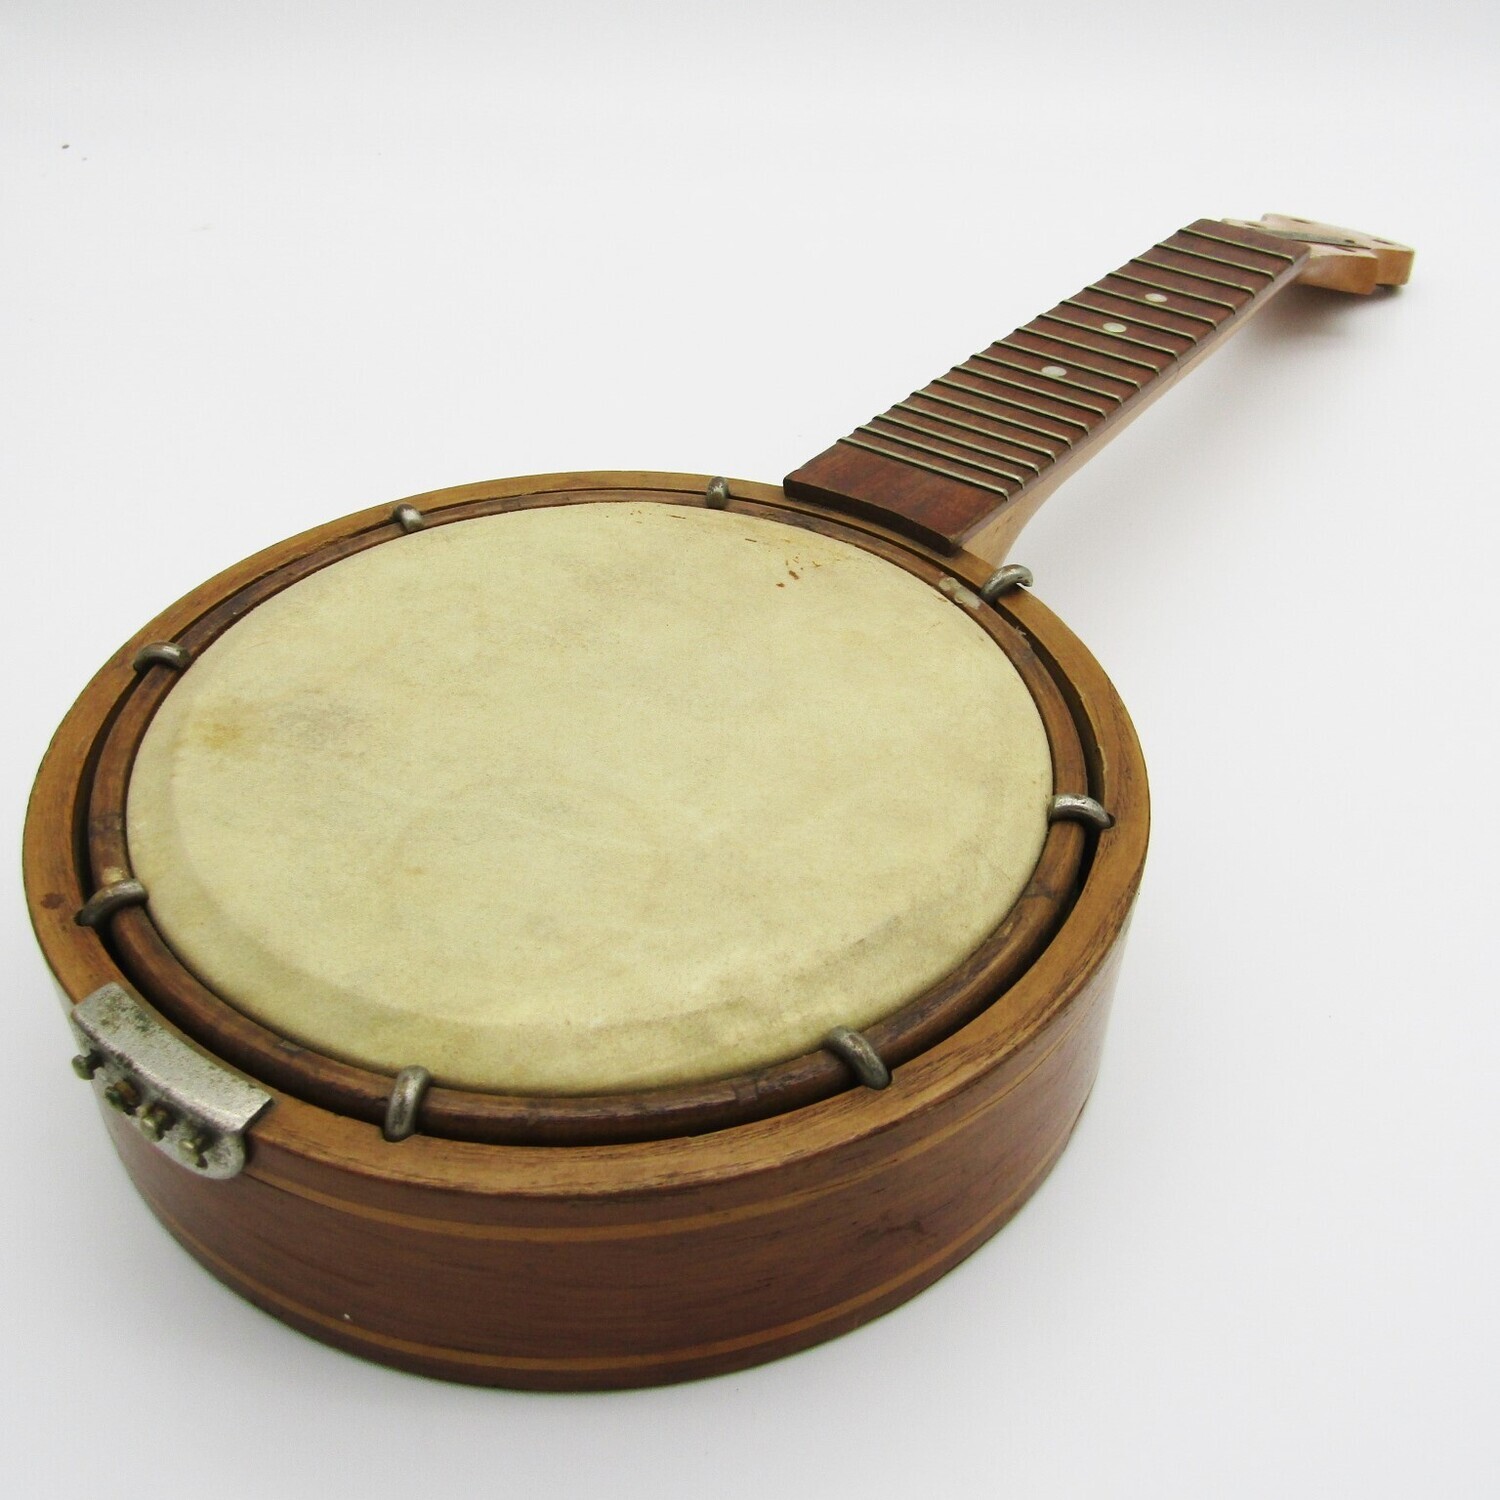 Vintage Pamensky Bros Banjo Ukulele - no tuning pegs and not stringed